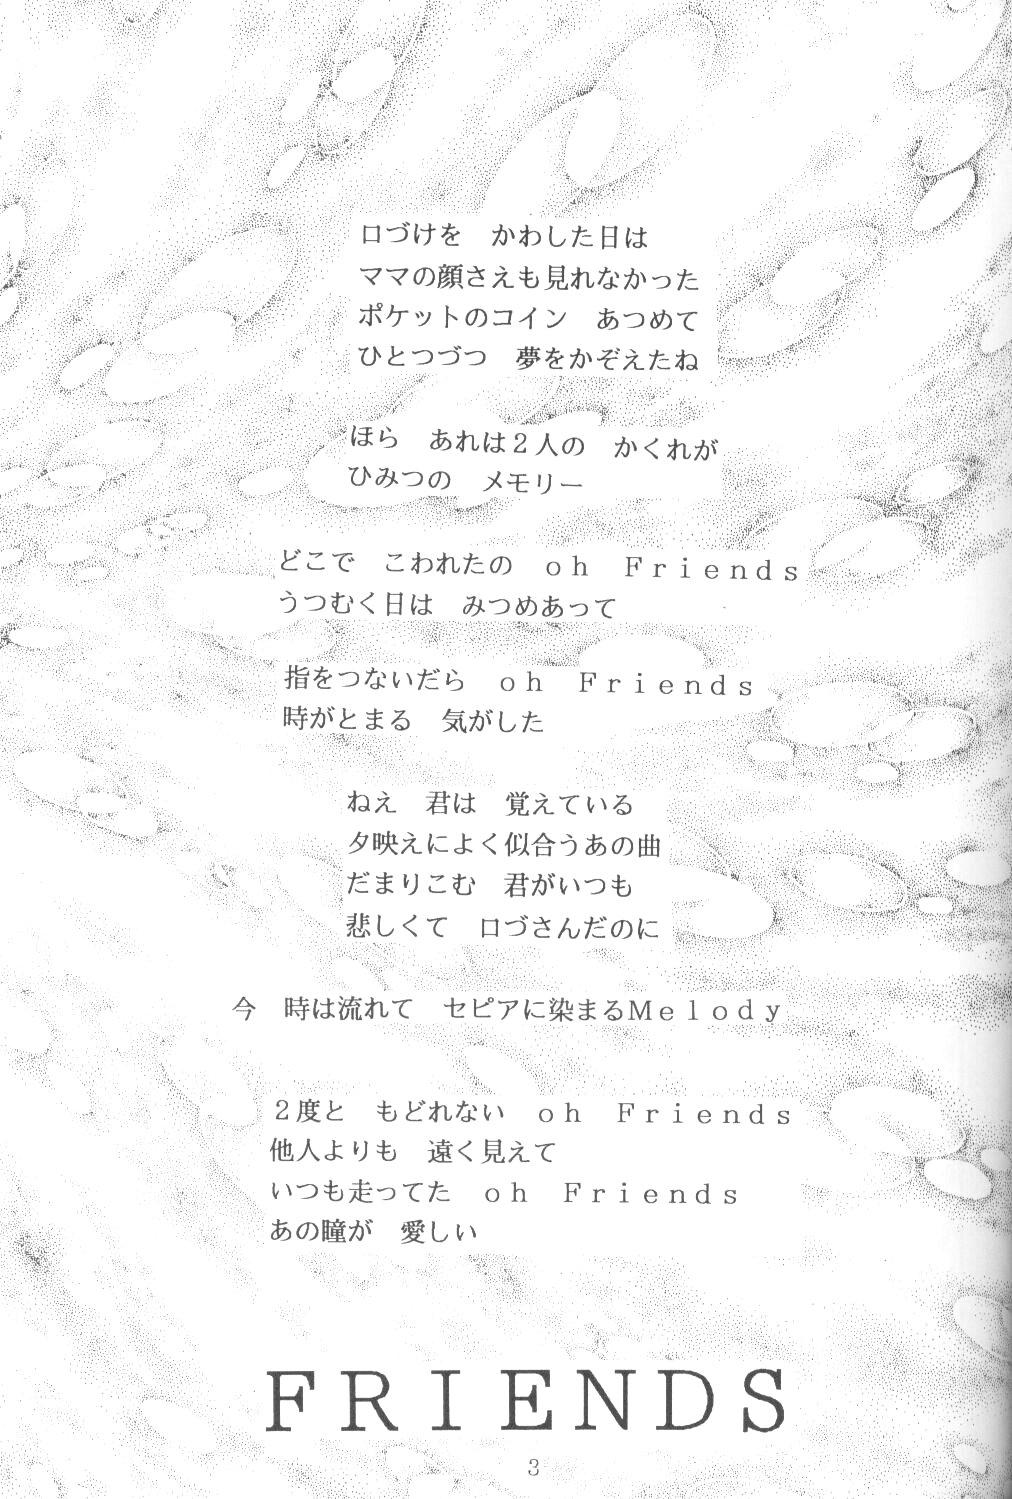 Ex Girlfriend ALIVE AMI LOST - Sailor moon Male - Page 2